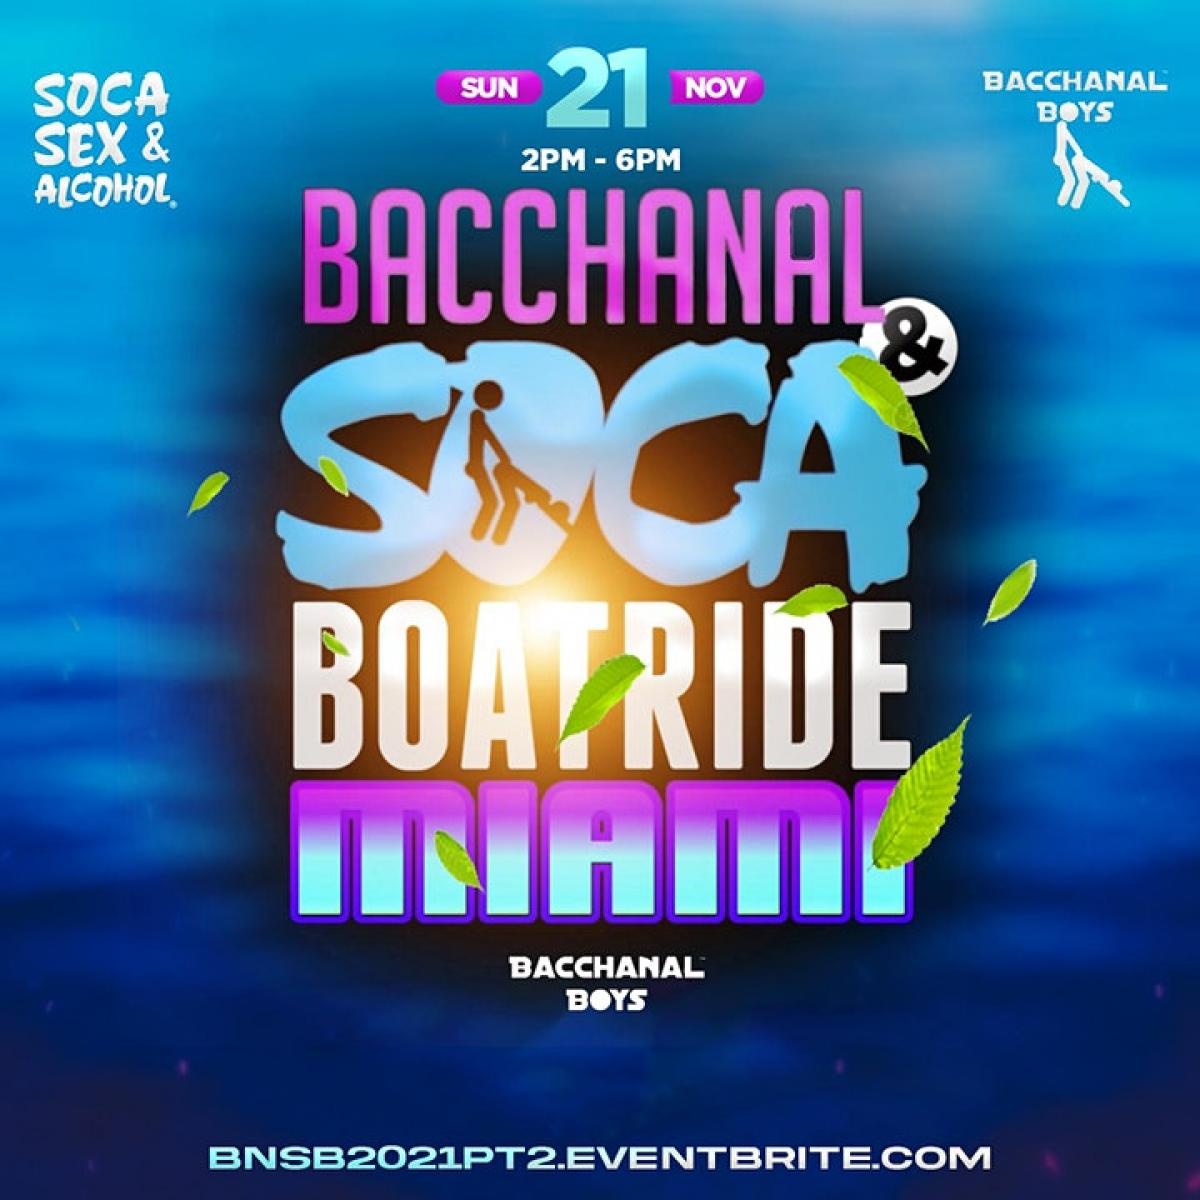 Bacchanal & Soca flyer or graphic.